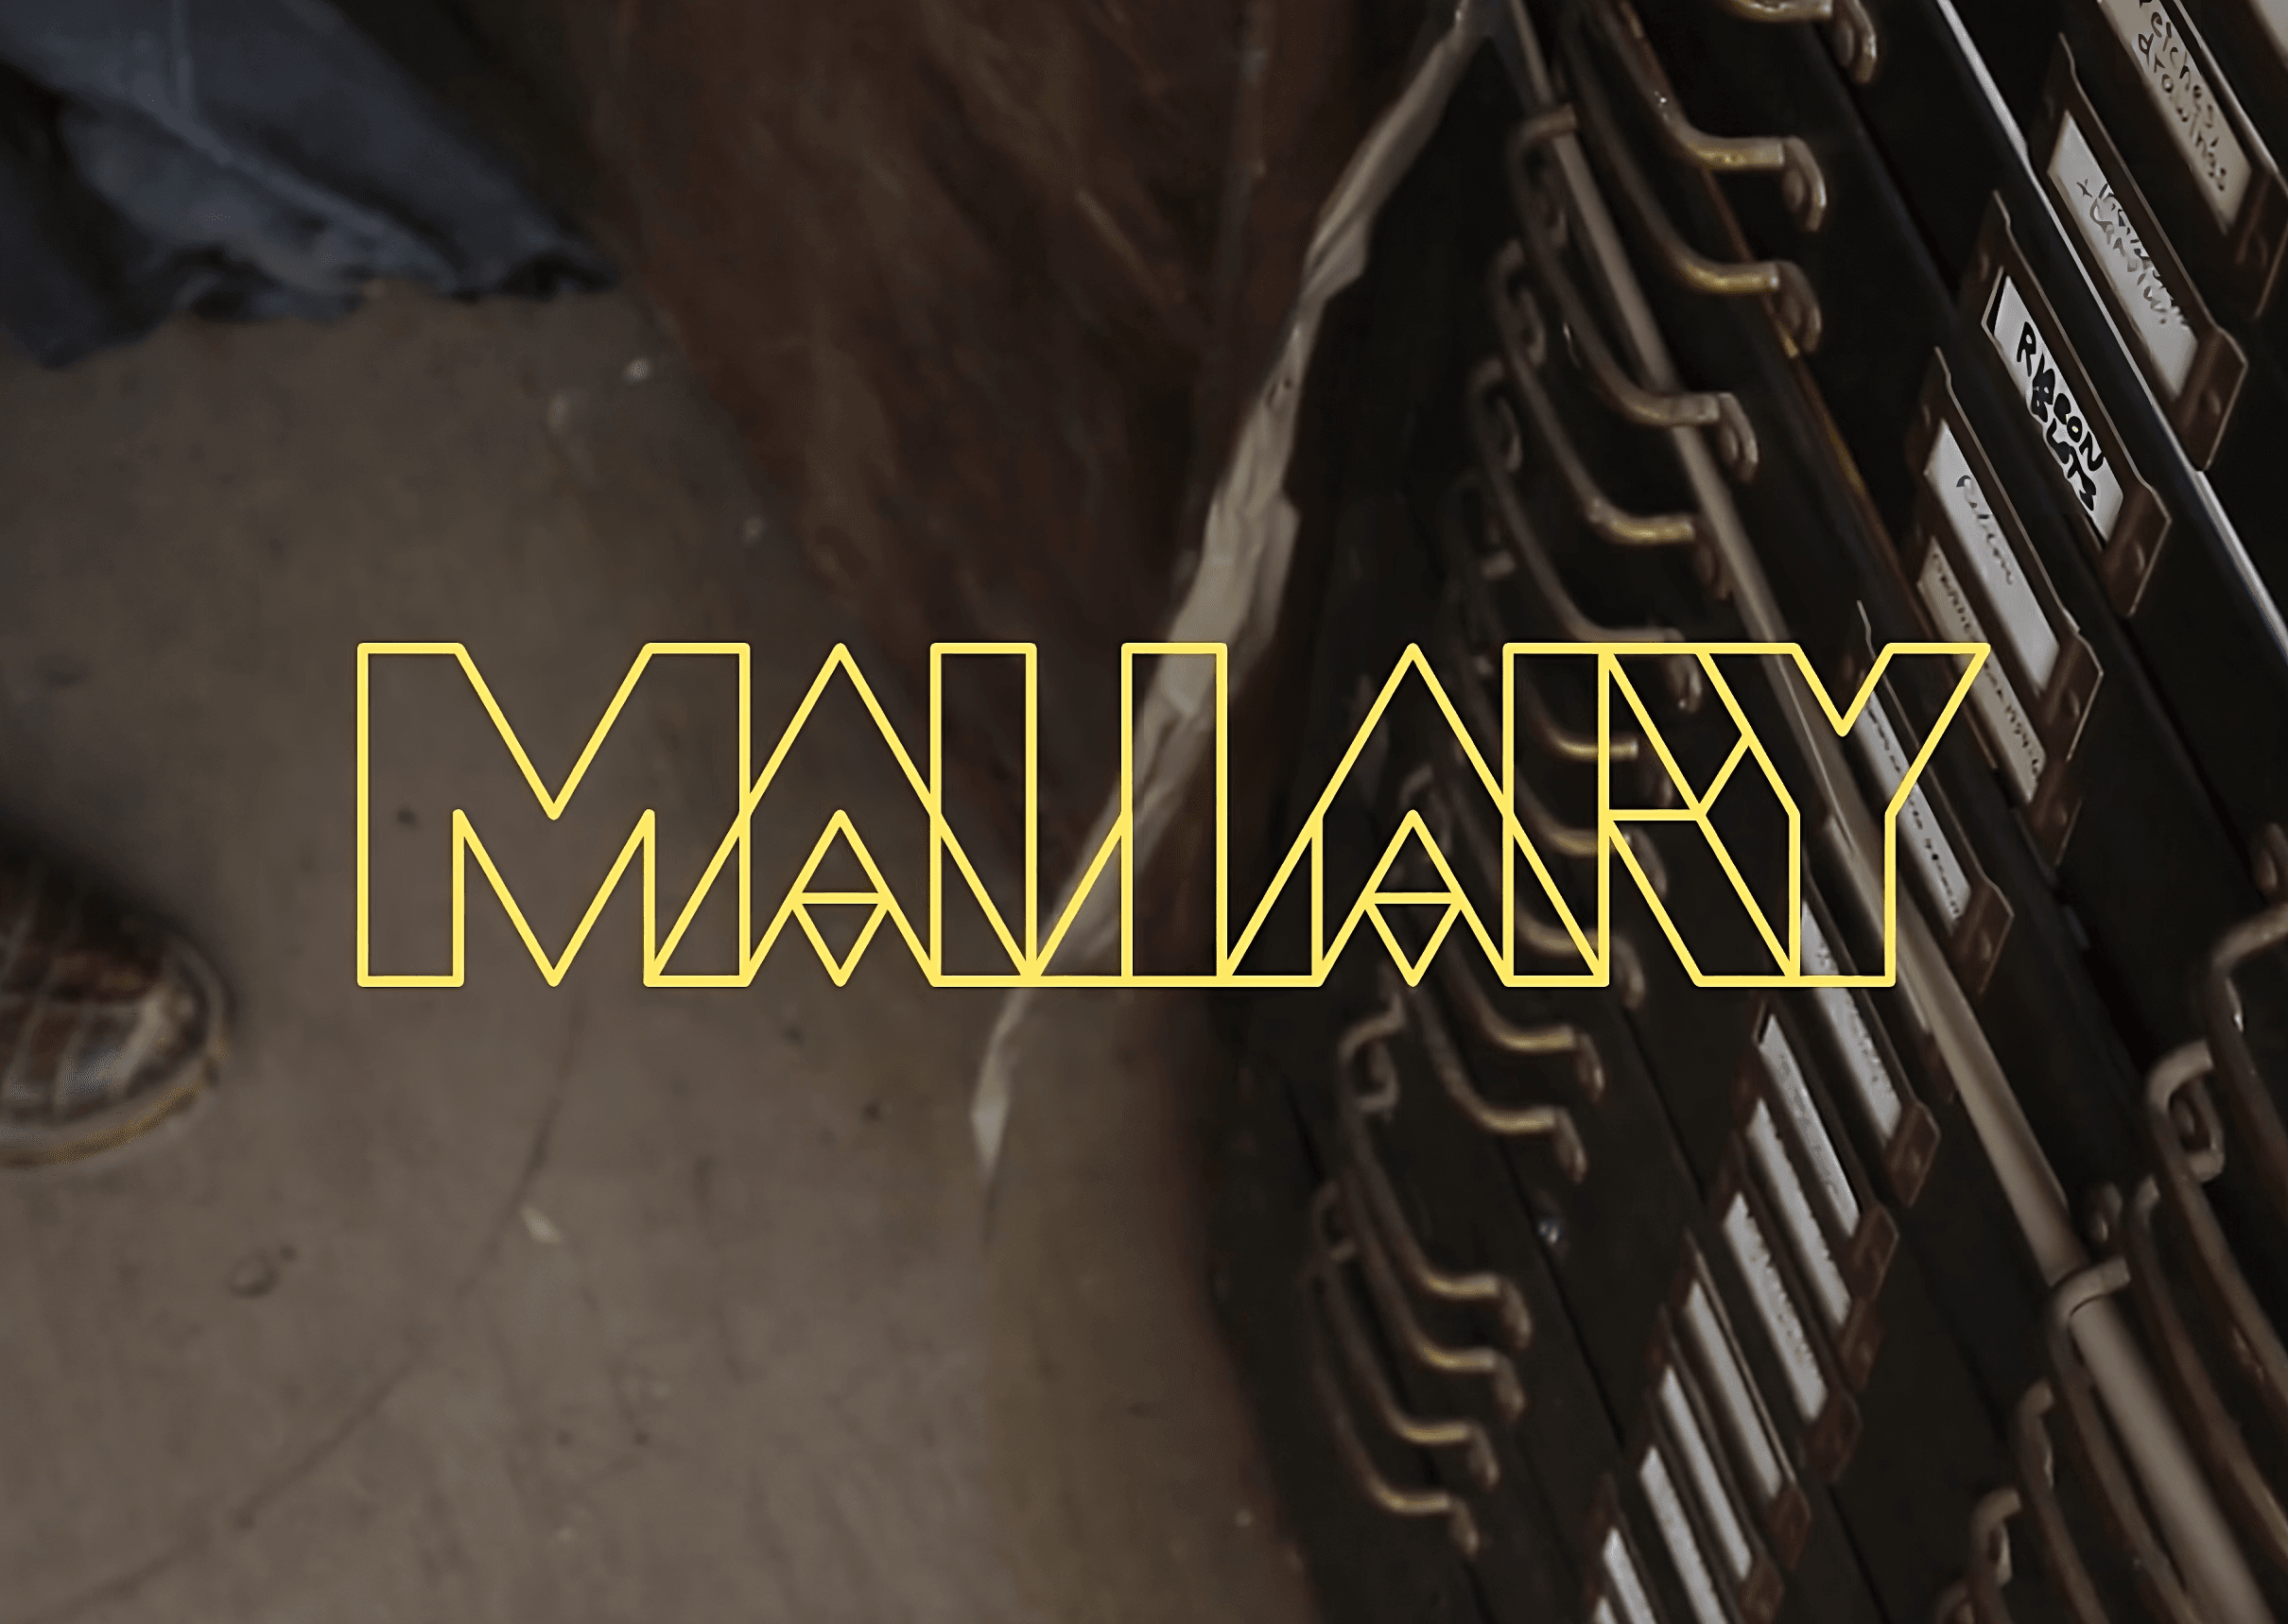 Who Is Robert Mallary?